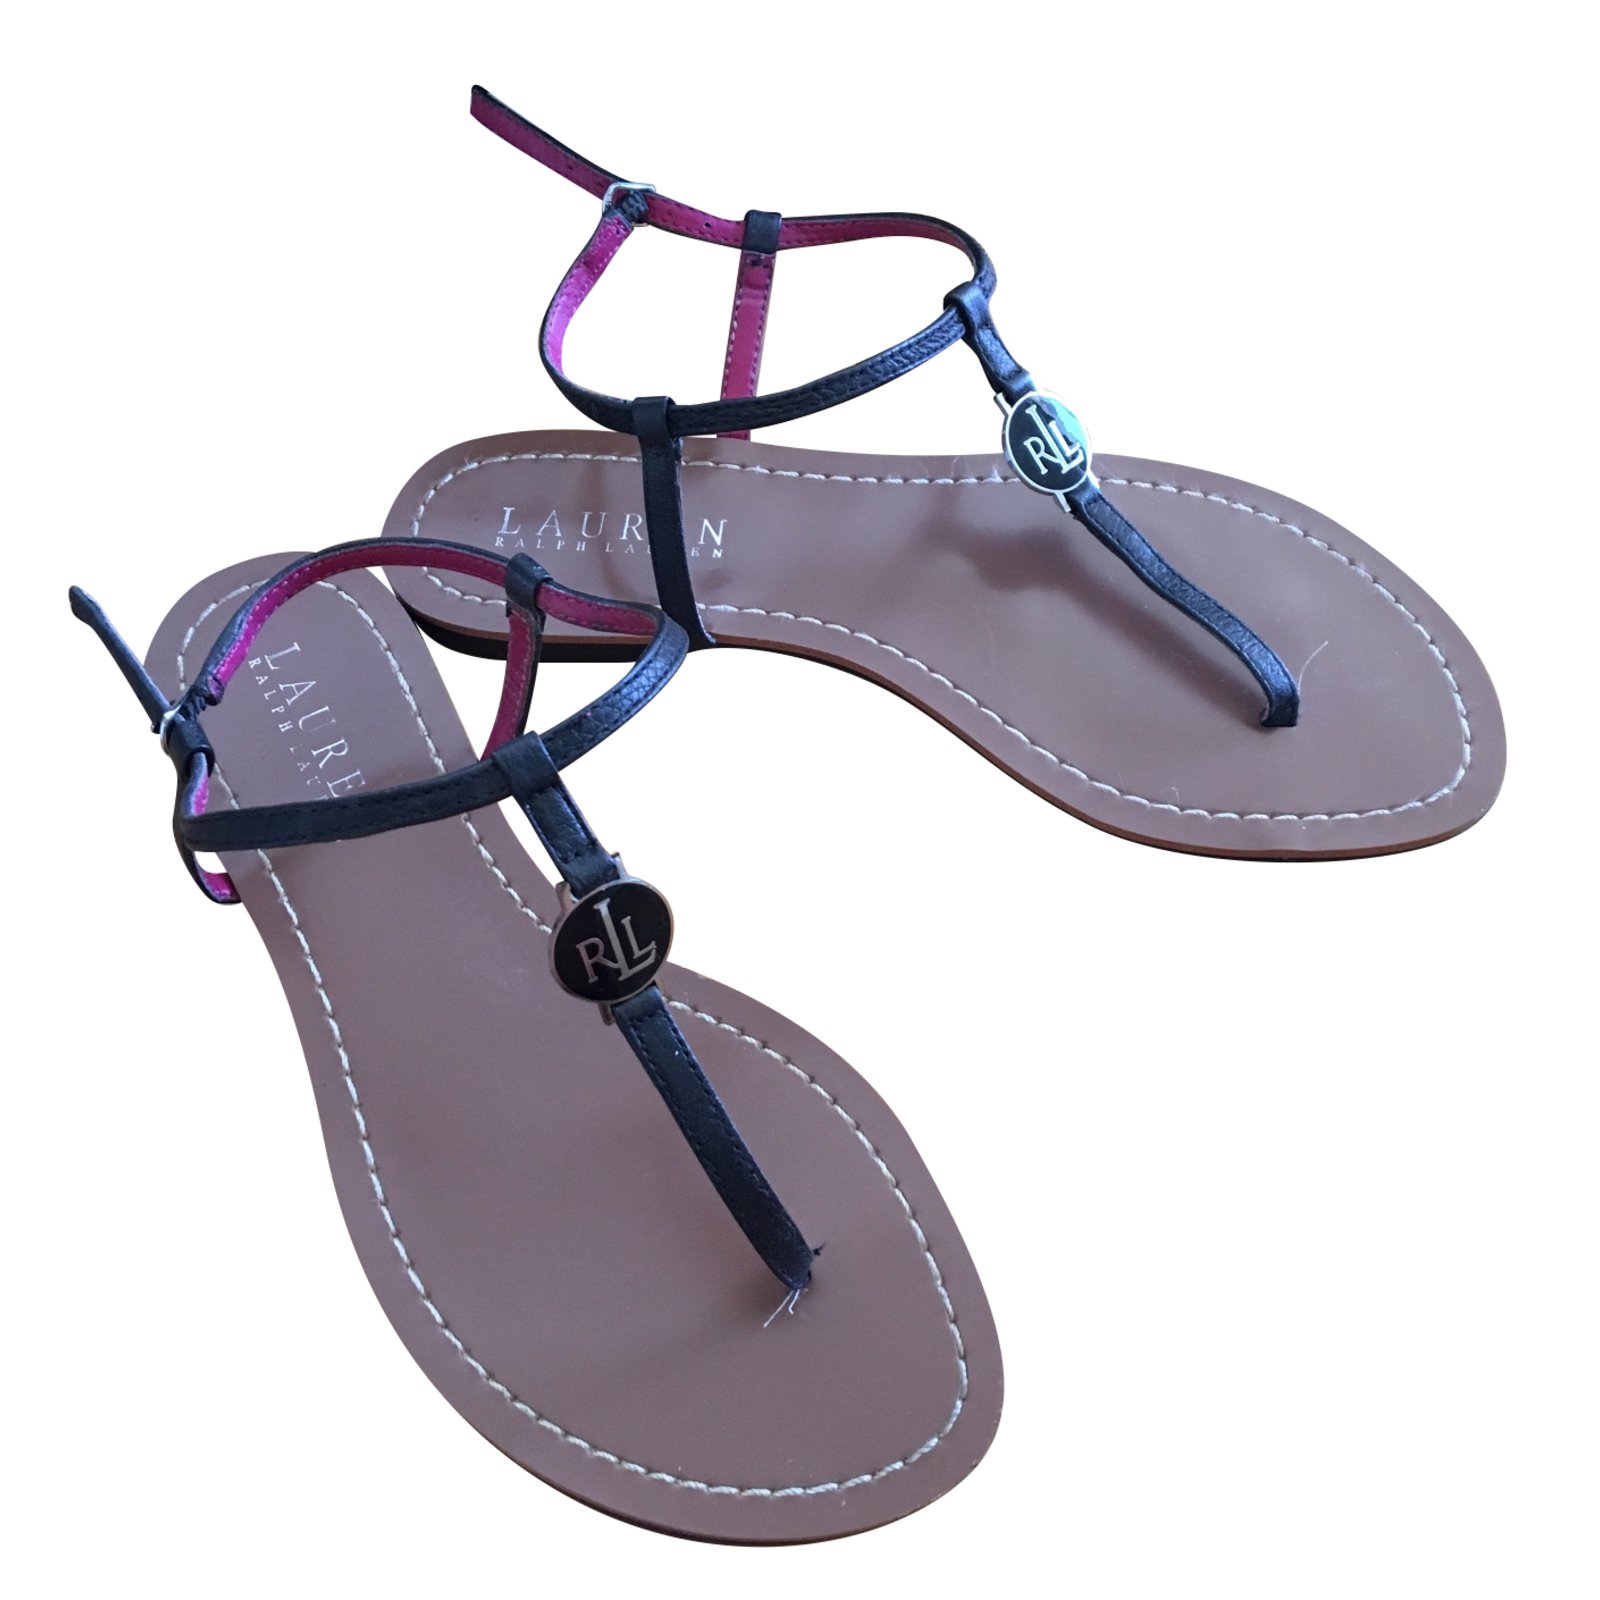 Ralph Lauren sandals Sandals Leather 